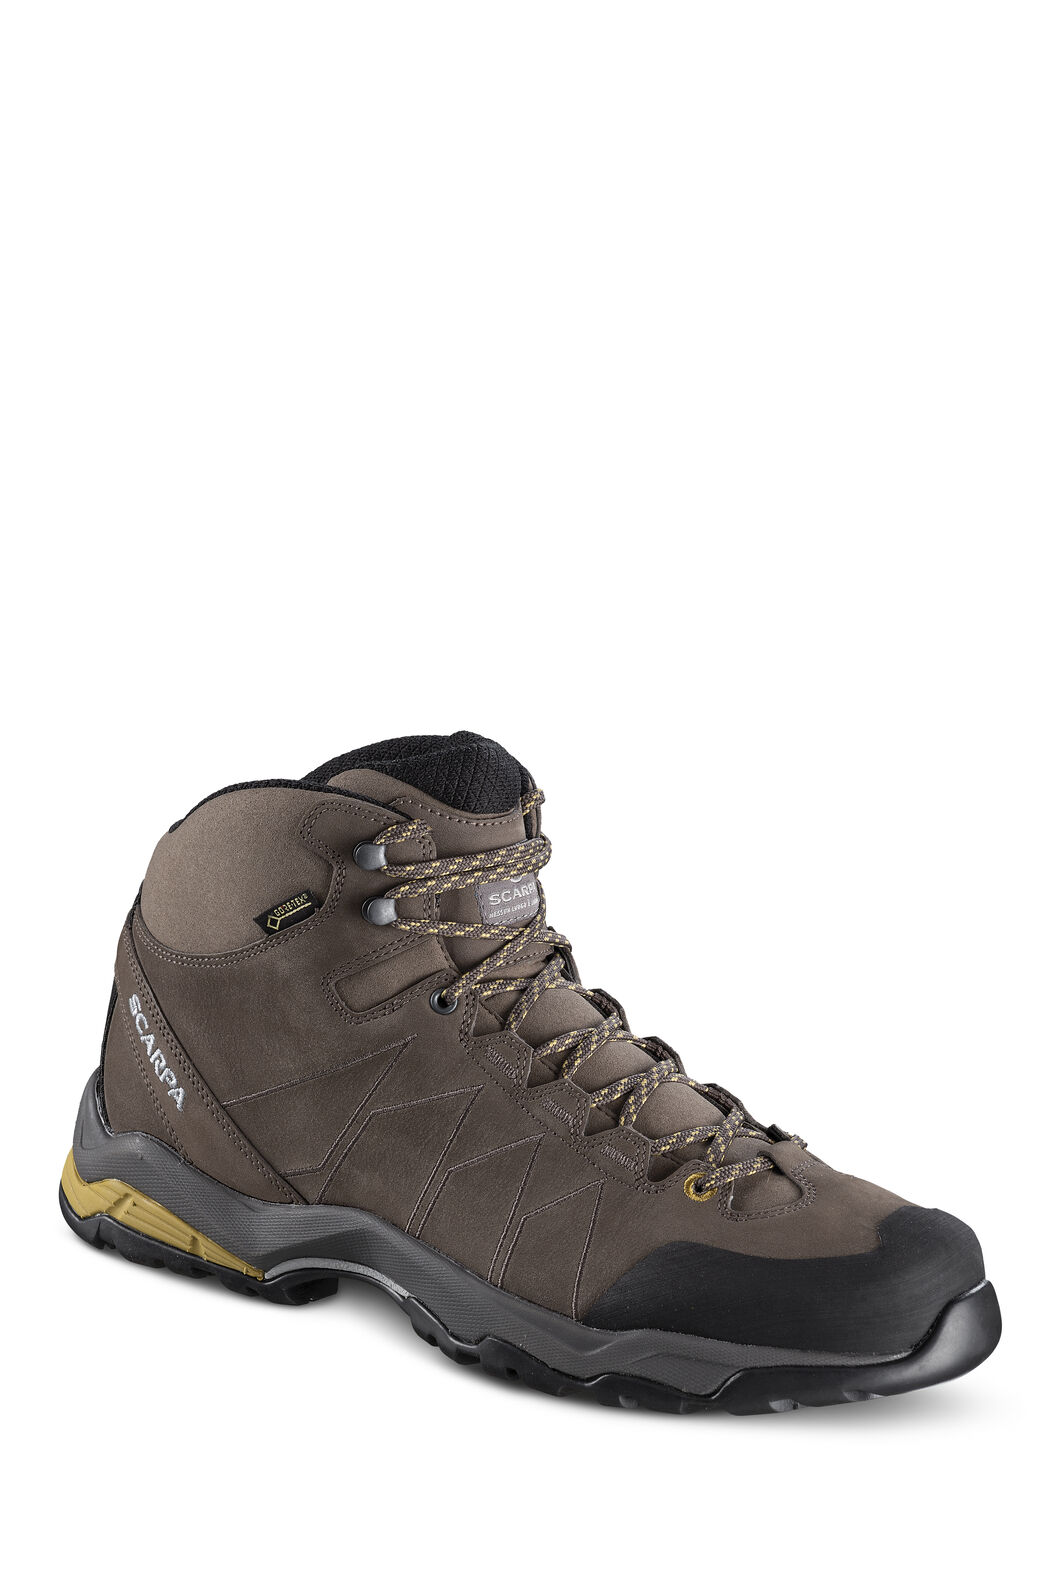 Scarpa Moraine Plus GTX Hiking Boot - Men's | Macpac